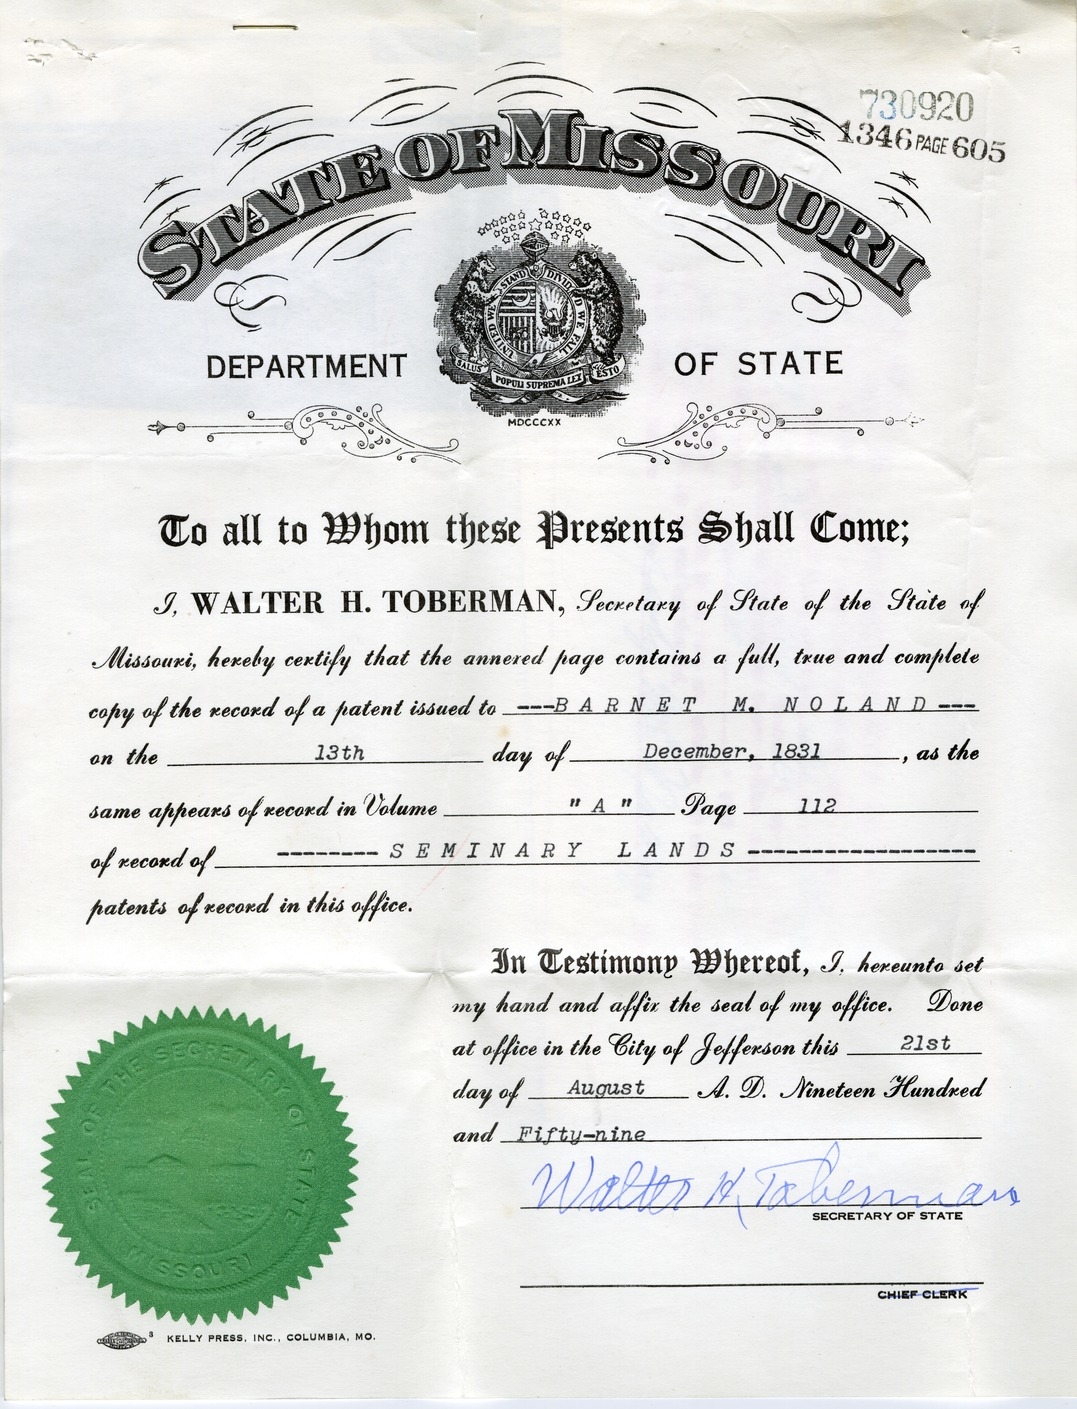 Copy of Patent of Barnet M. Noland